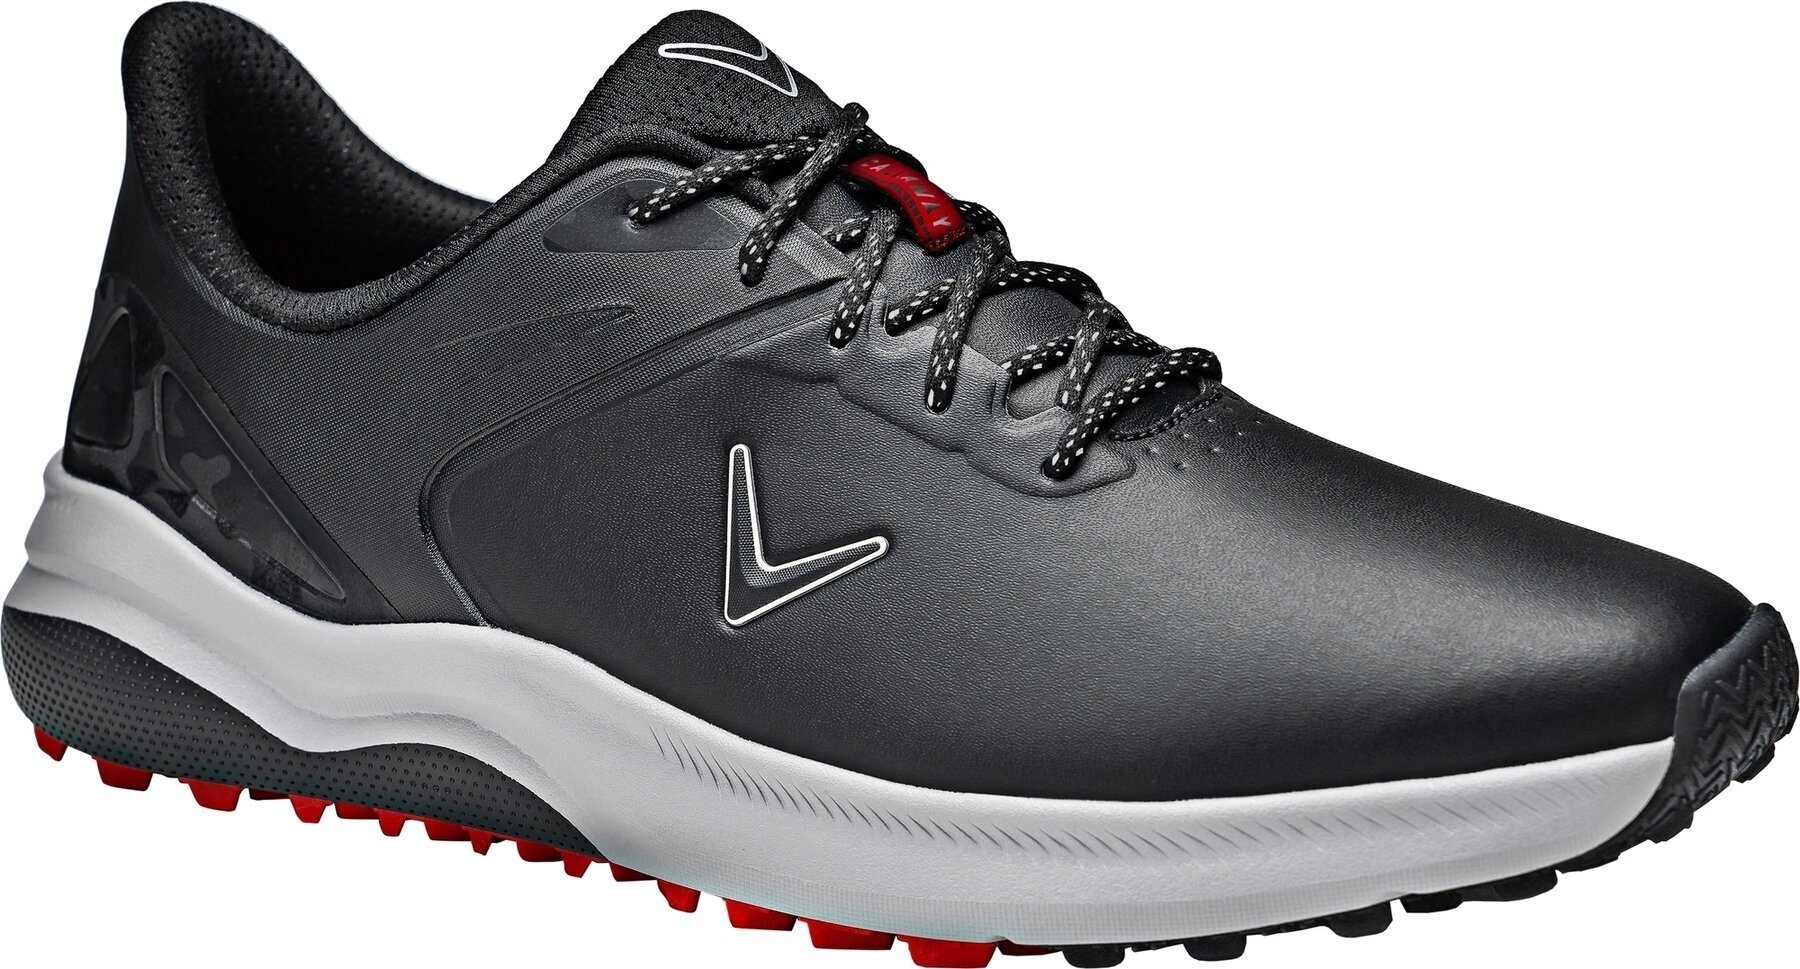 Herren Golfschuhe Callaway Lazer Mens Golf Shoes Schwarz 48,5